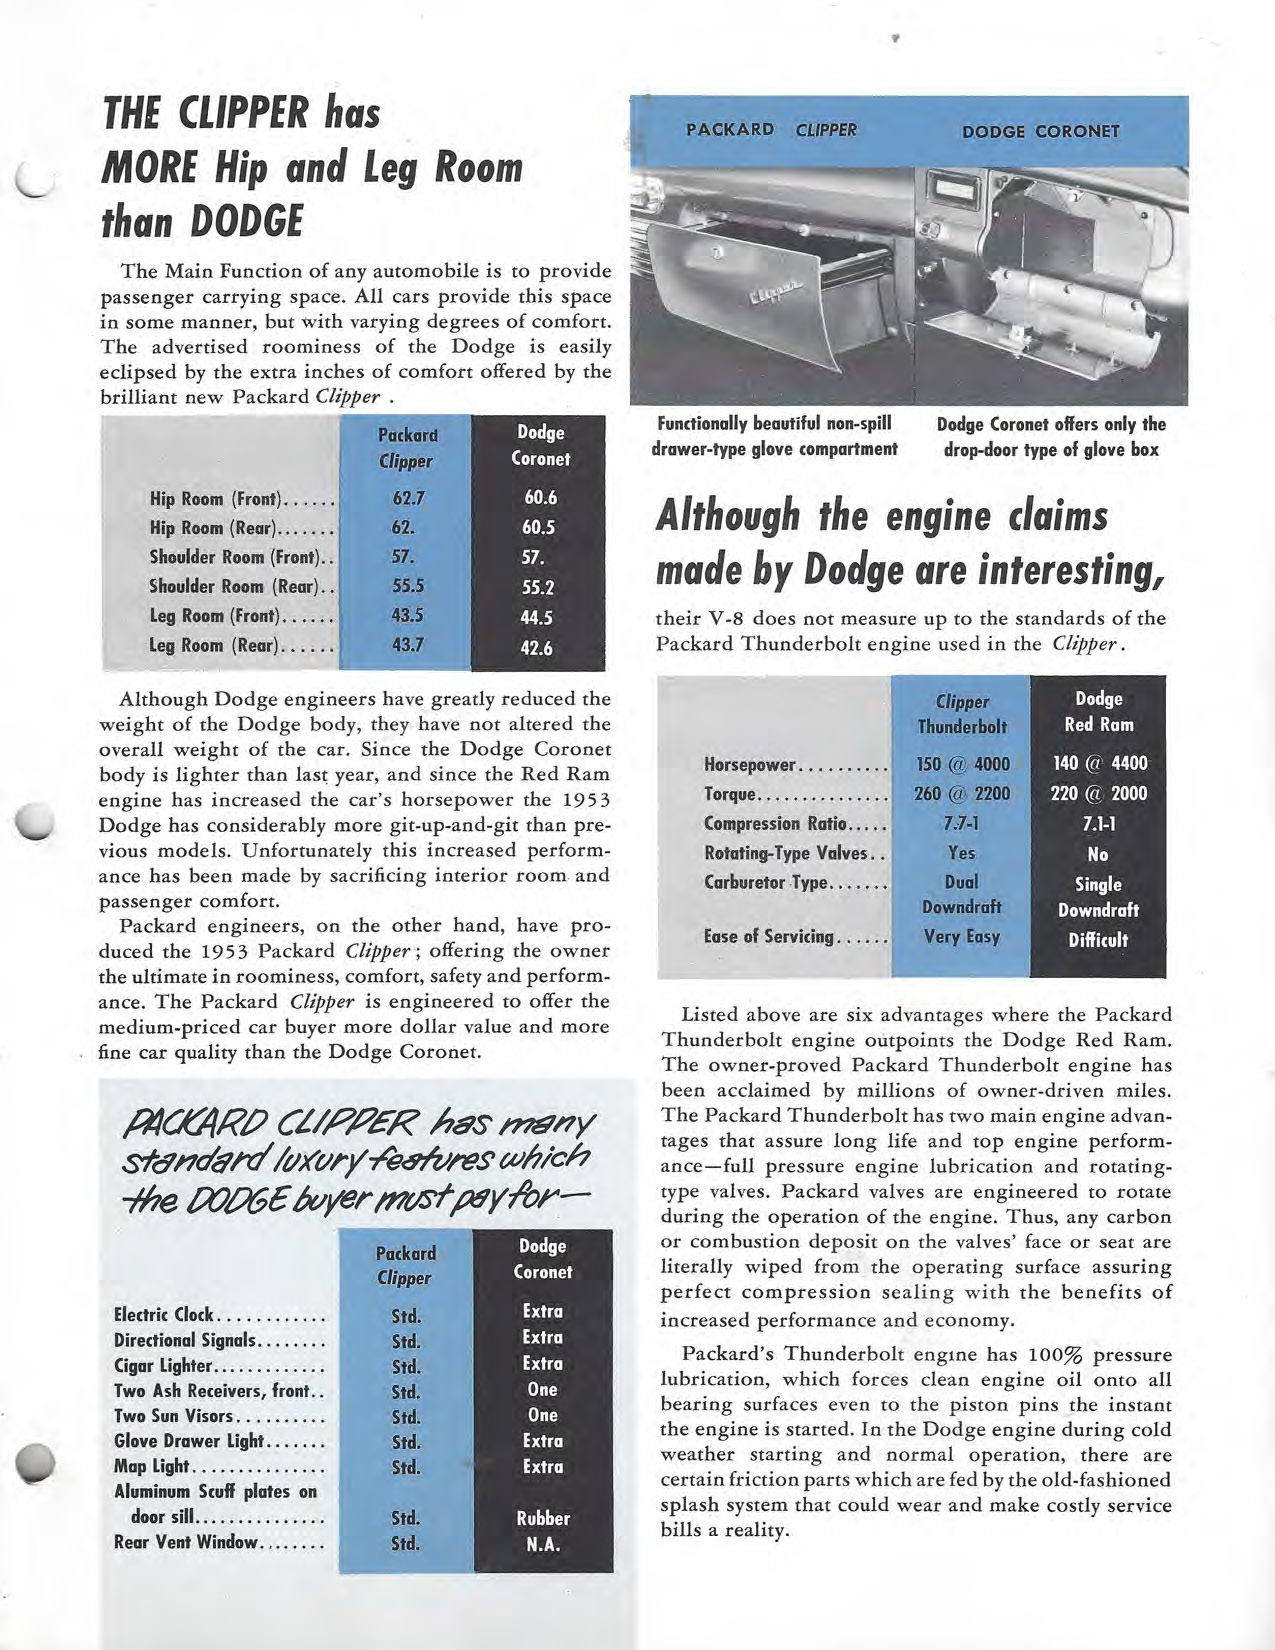 1953 Packard Clipper vs Dodge Coronet.pdf-2024-1-14 14.44.21_Page_3